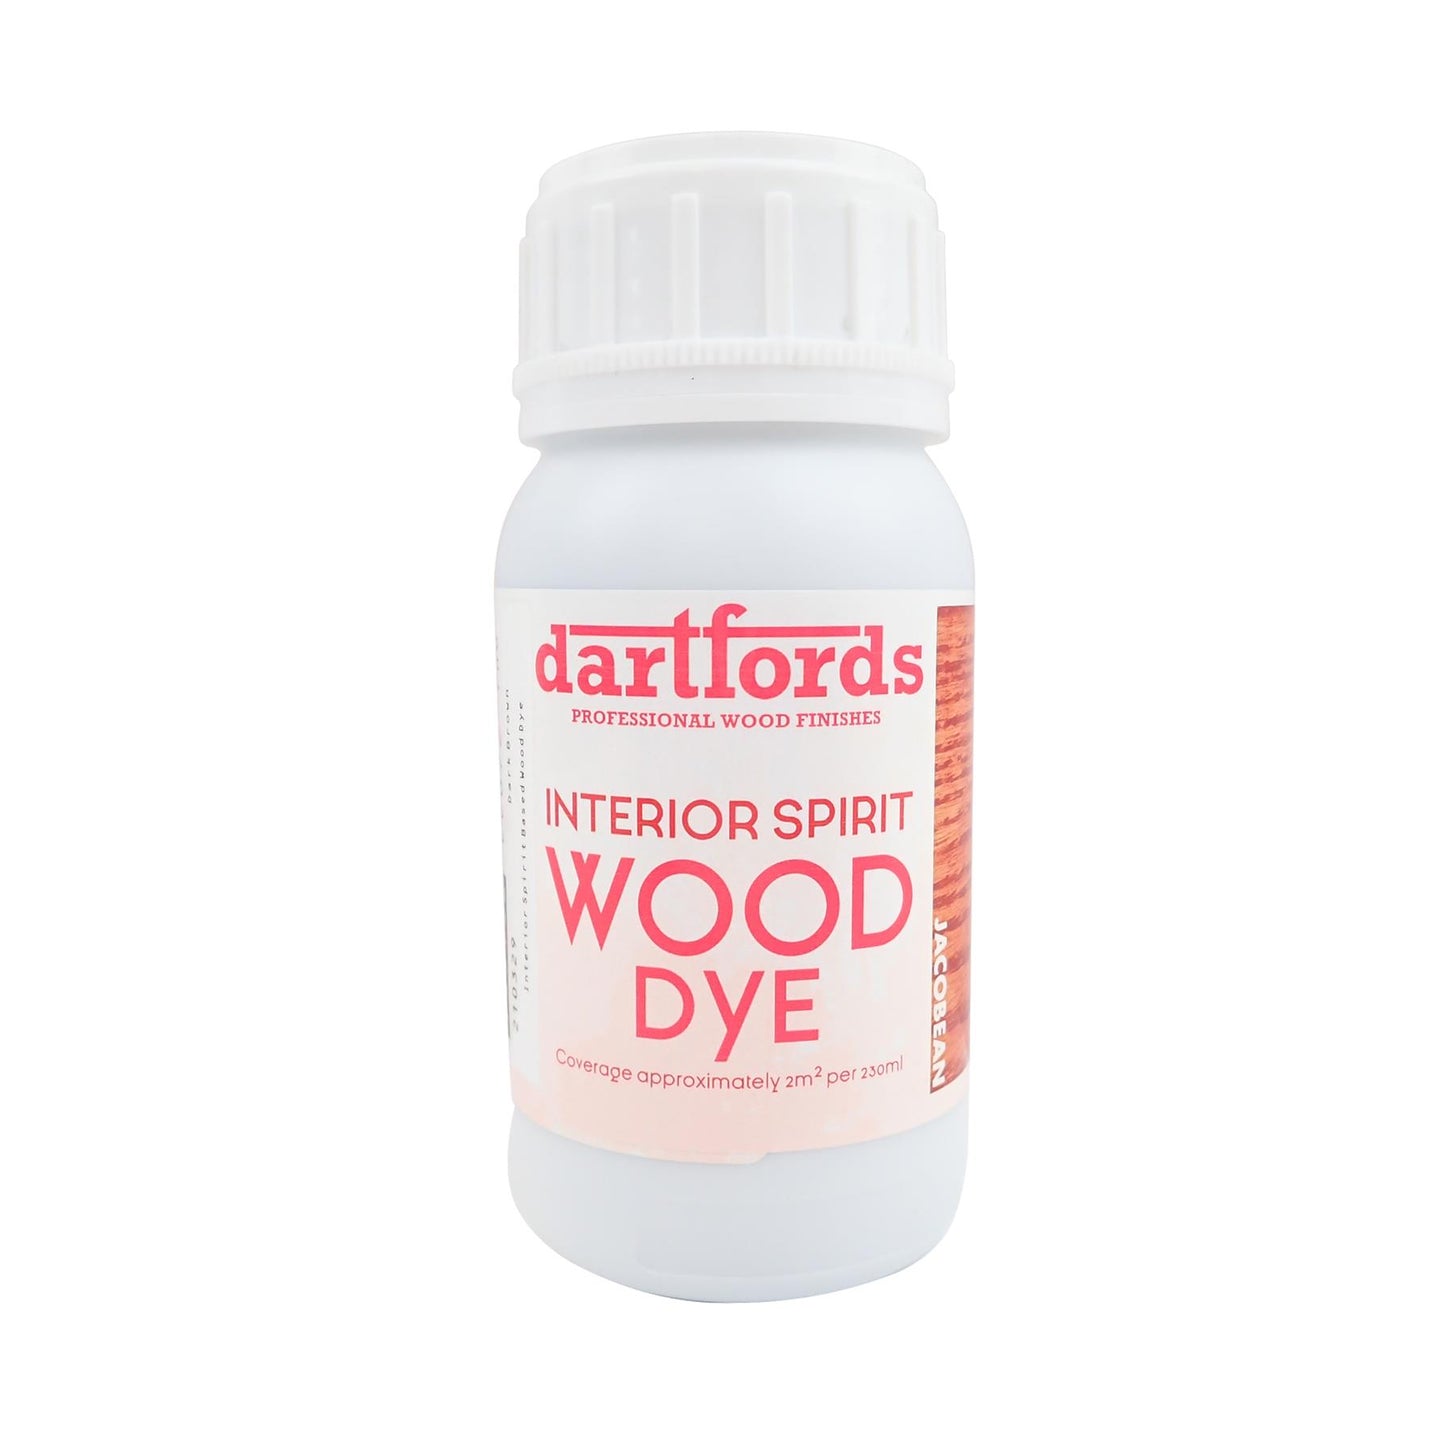 dartfords Dark Brown Interior Spirit Based Wood Dye - 230ml Tin